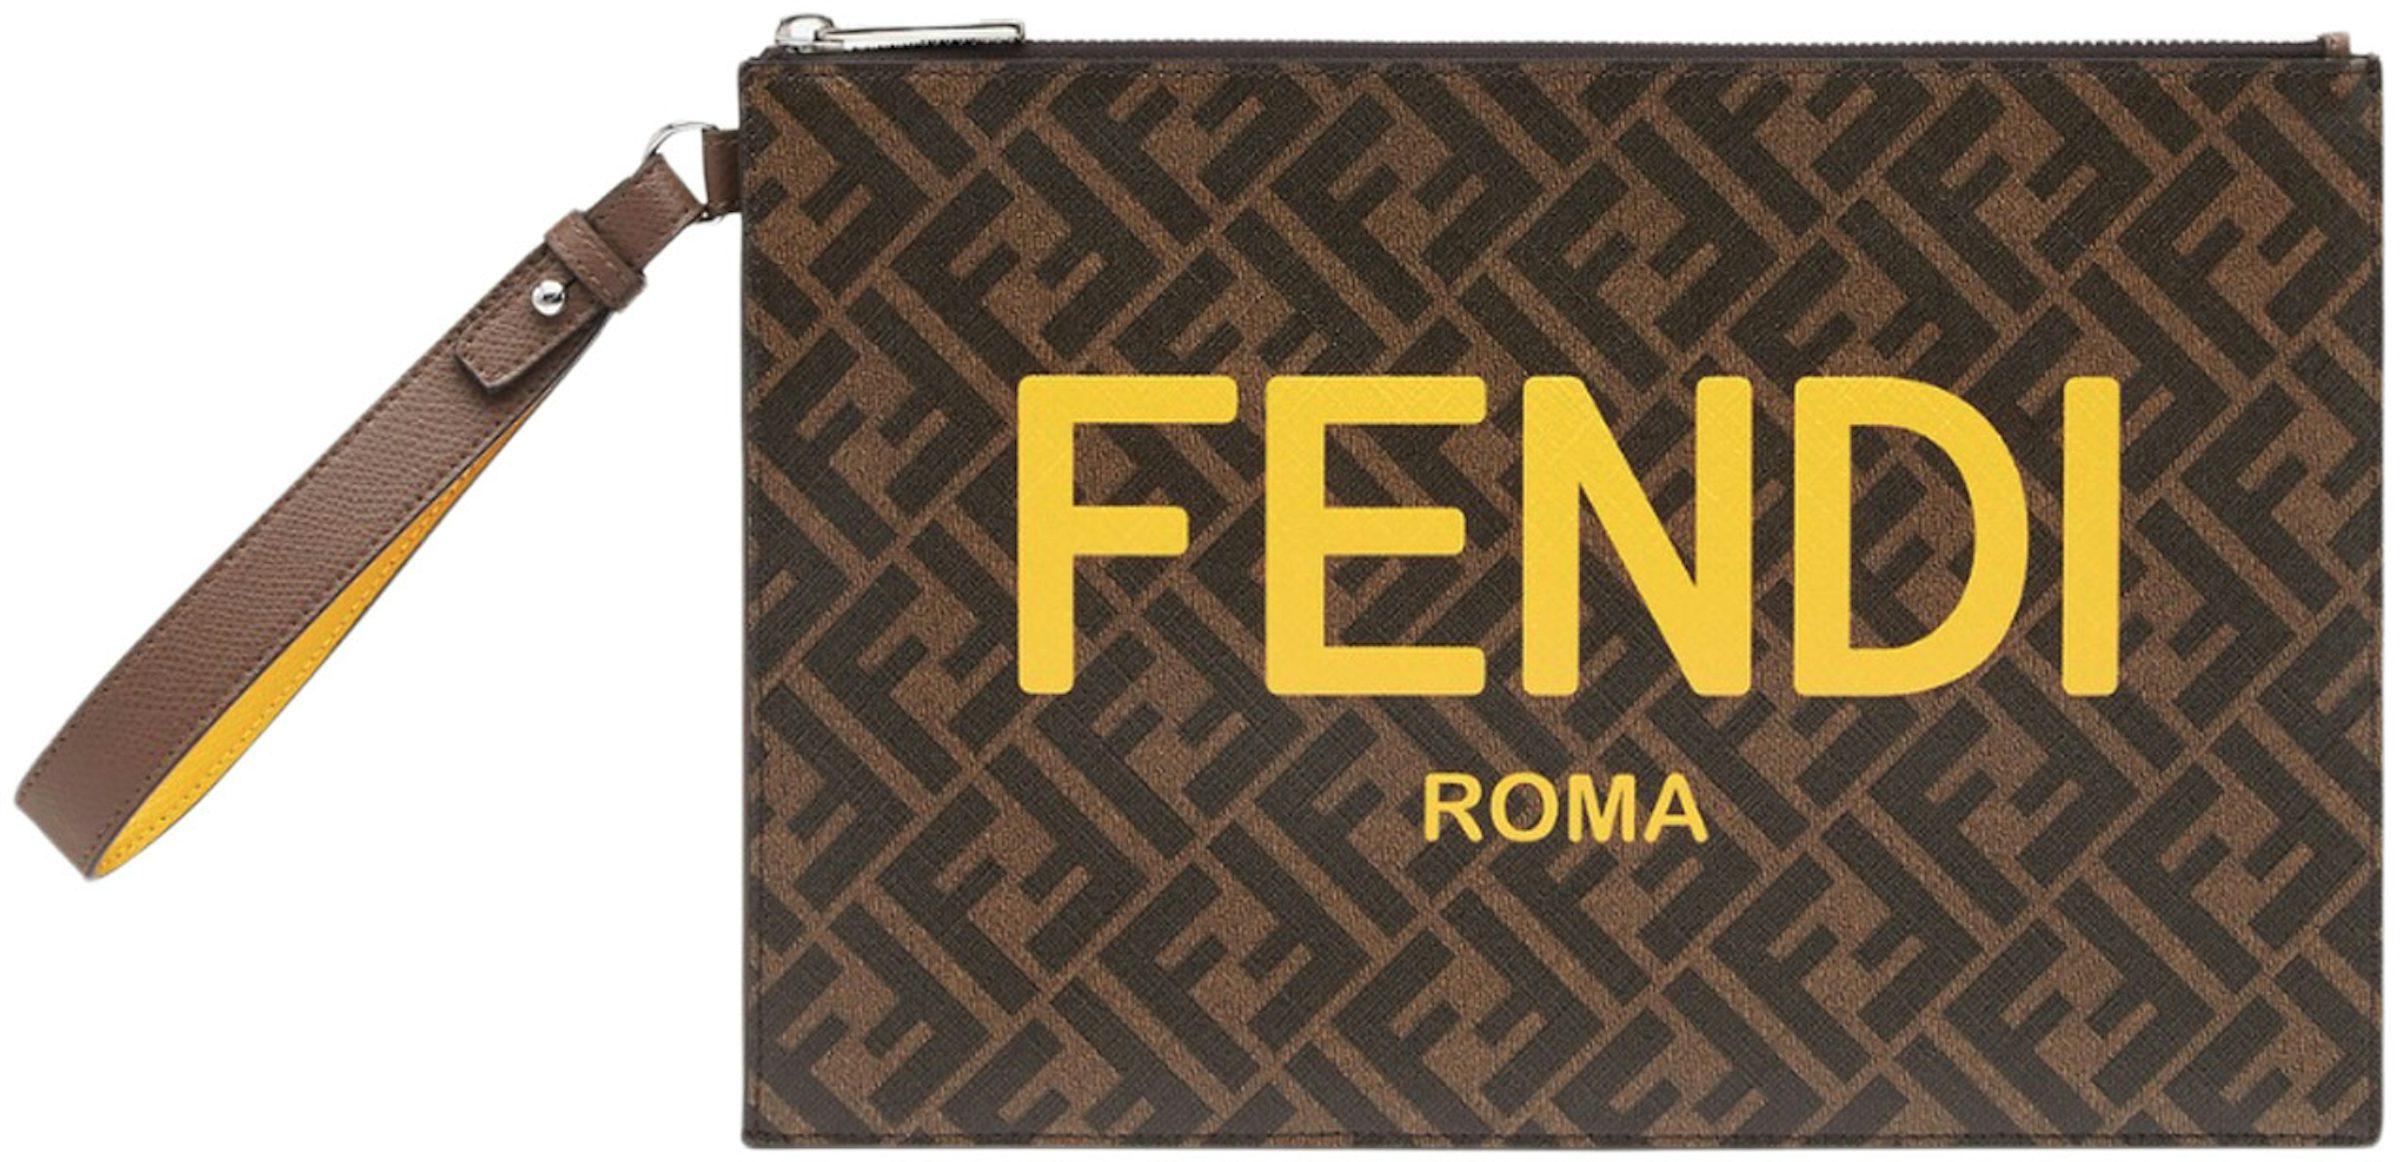 Fendi Roma Clutch - Black leather pouch